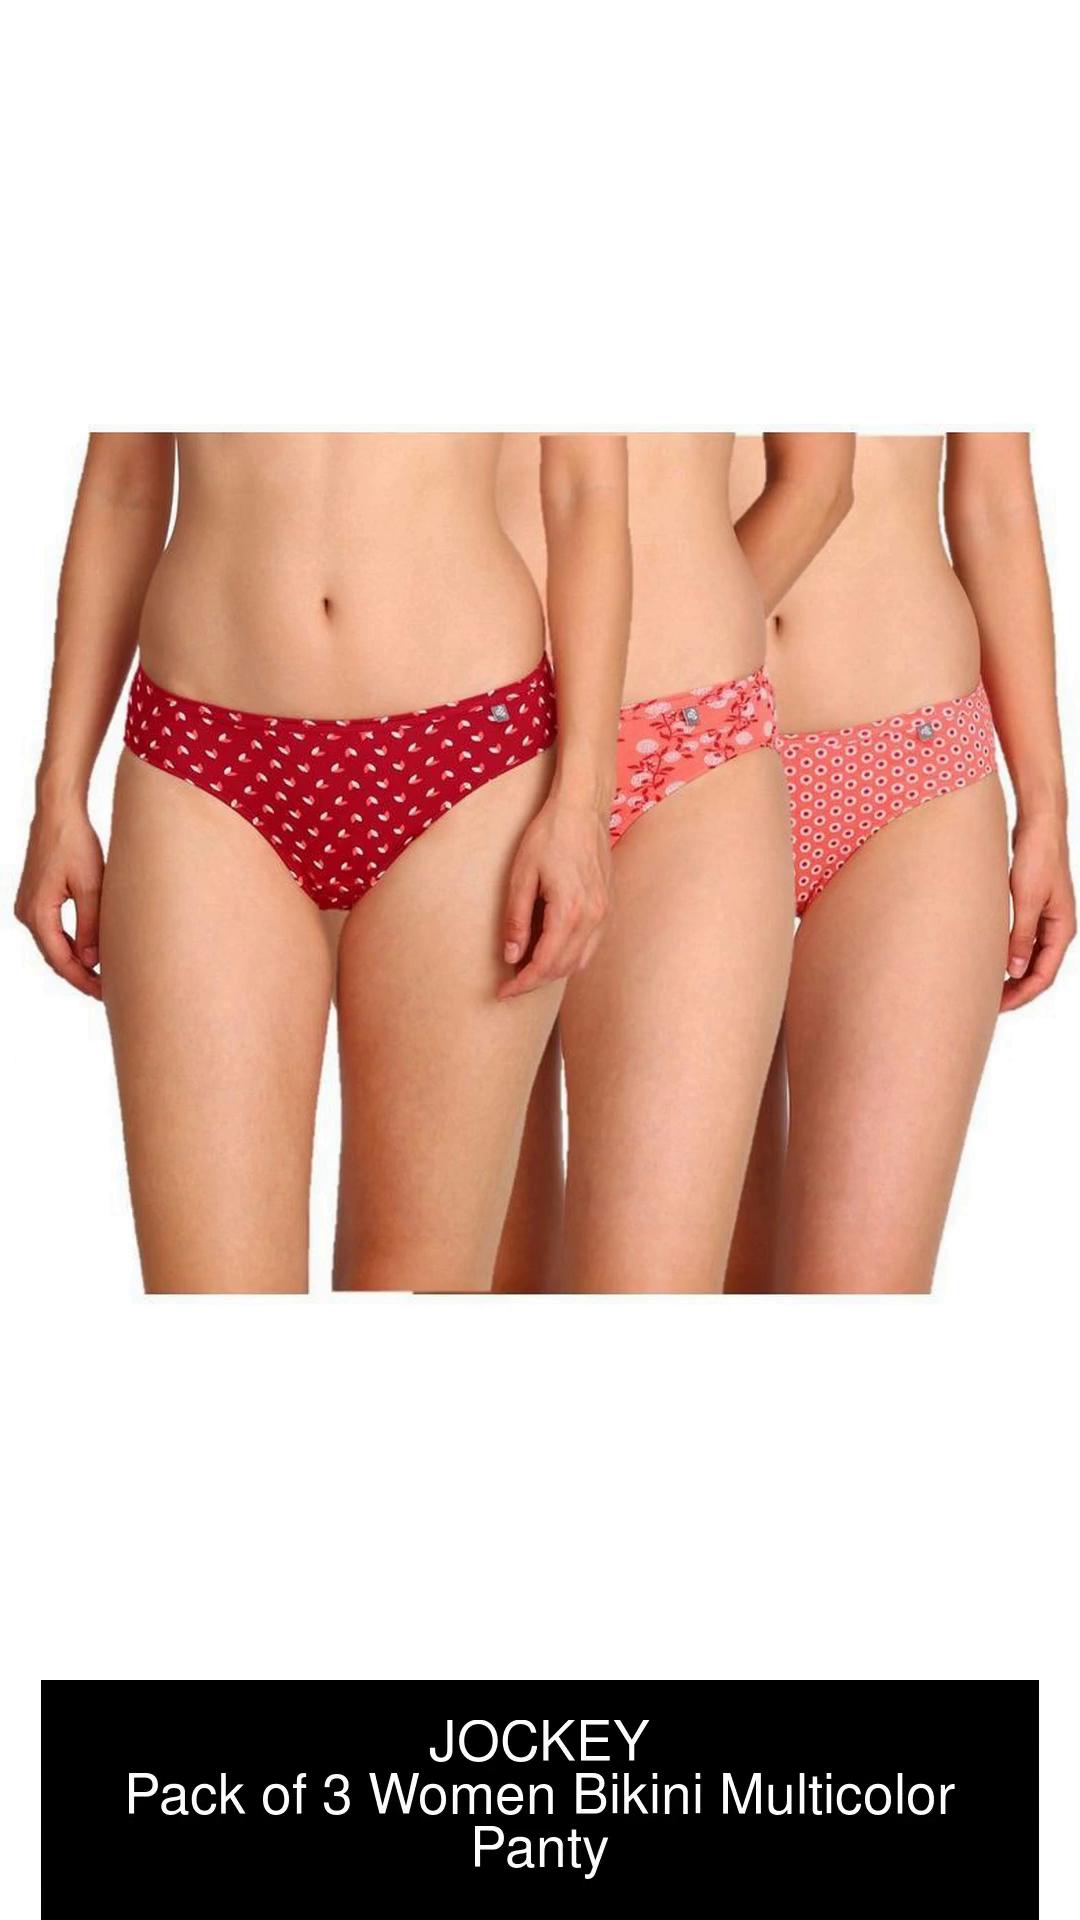 Jockey Assorted Print Bikini Pack Of 3 #1410, Bikini Underwear For Women,  Hot Bikini Panty, Sexy Bikini Panty, High Waisted Bikinis, बिकनी पैंटी -  Zedds, New Delhi